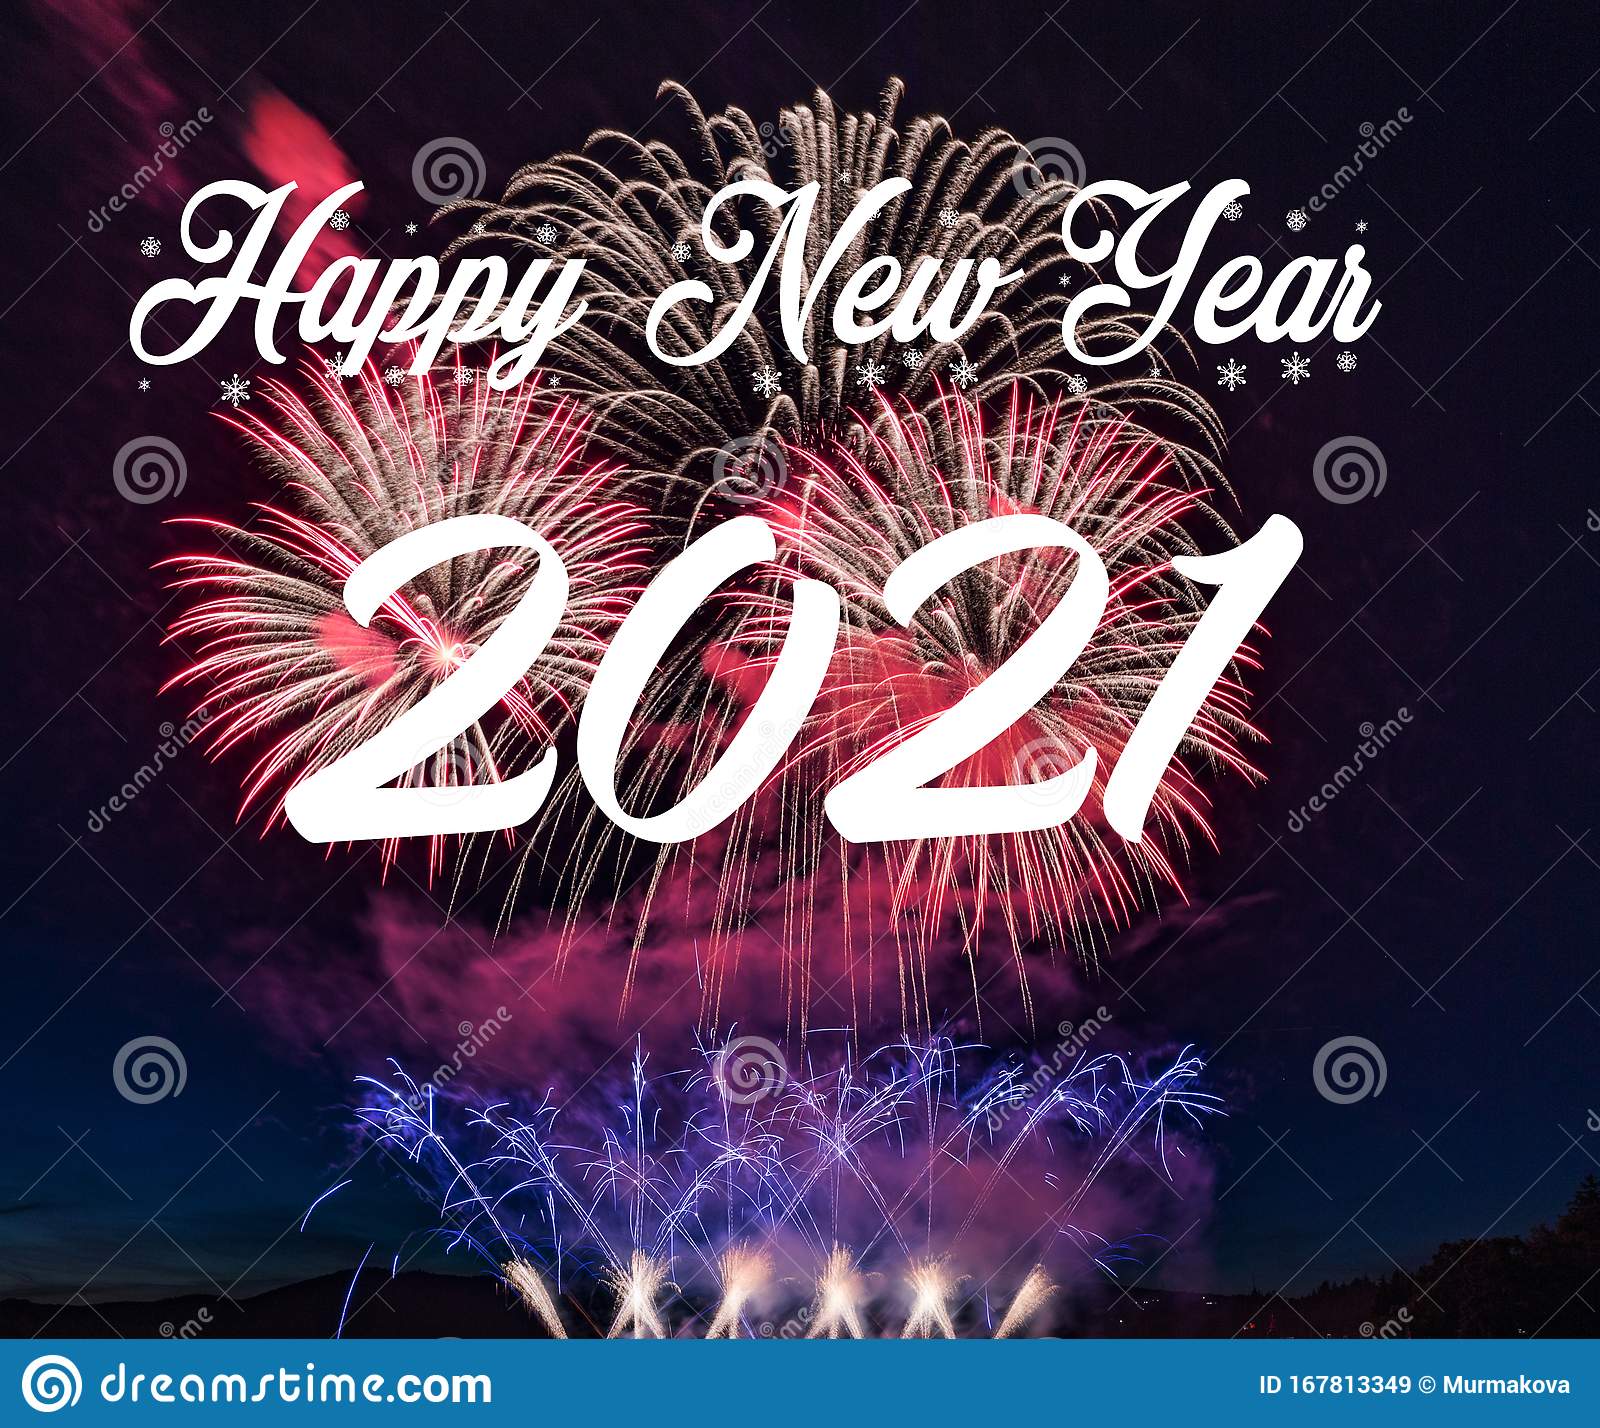 Happy New Year 2021.jpg